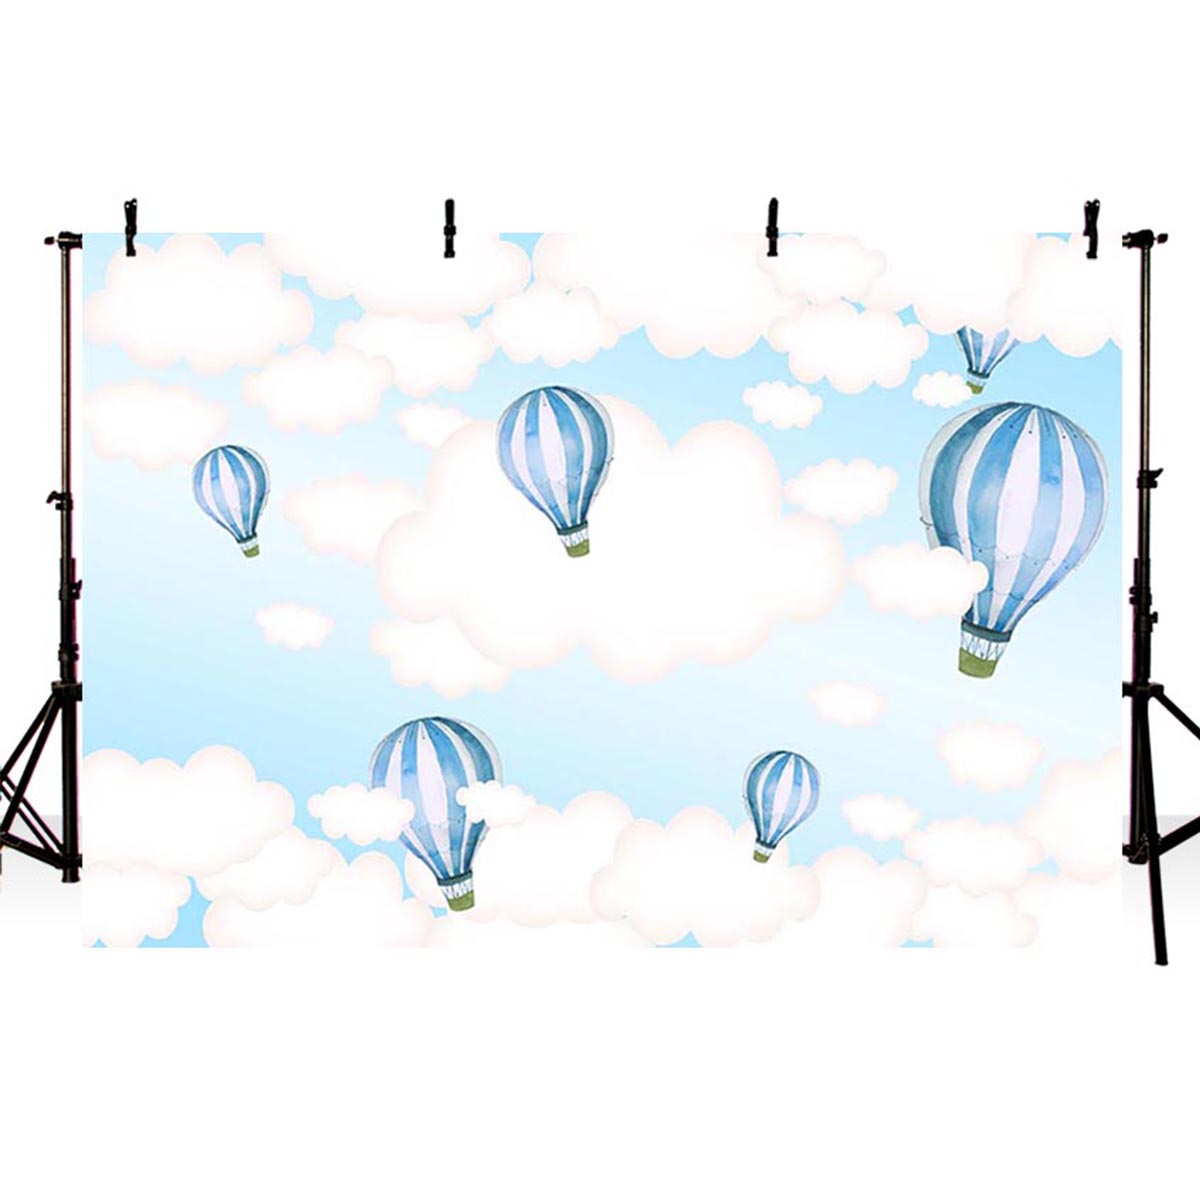 

5x3FT 7x5FT 9x6FT Sky Белое облако Воздушный шар Фон для фотосъемки Фон Студийная опора - 0,9x1,5 м